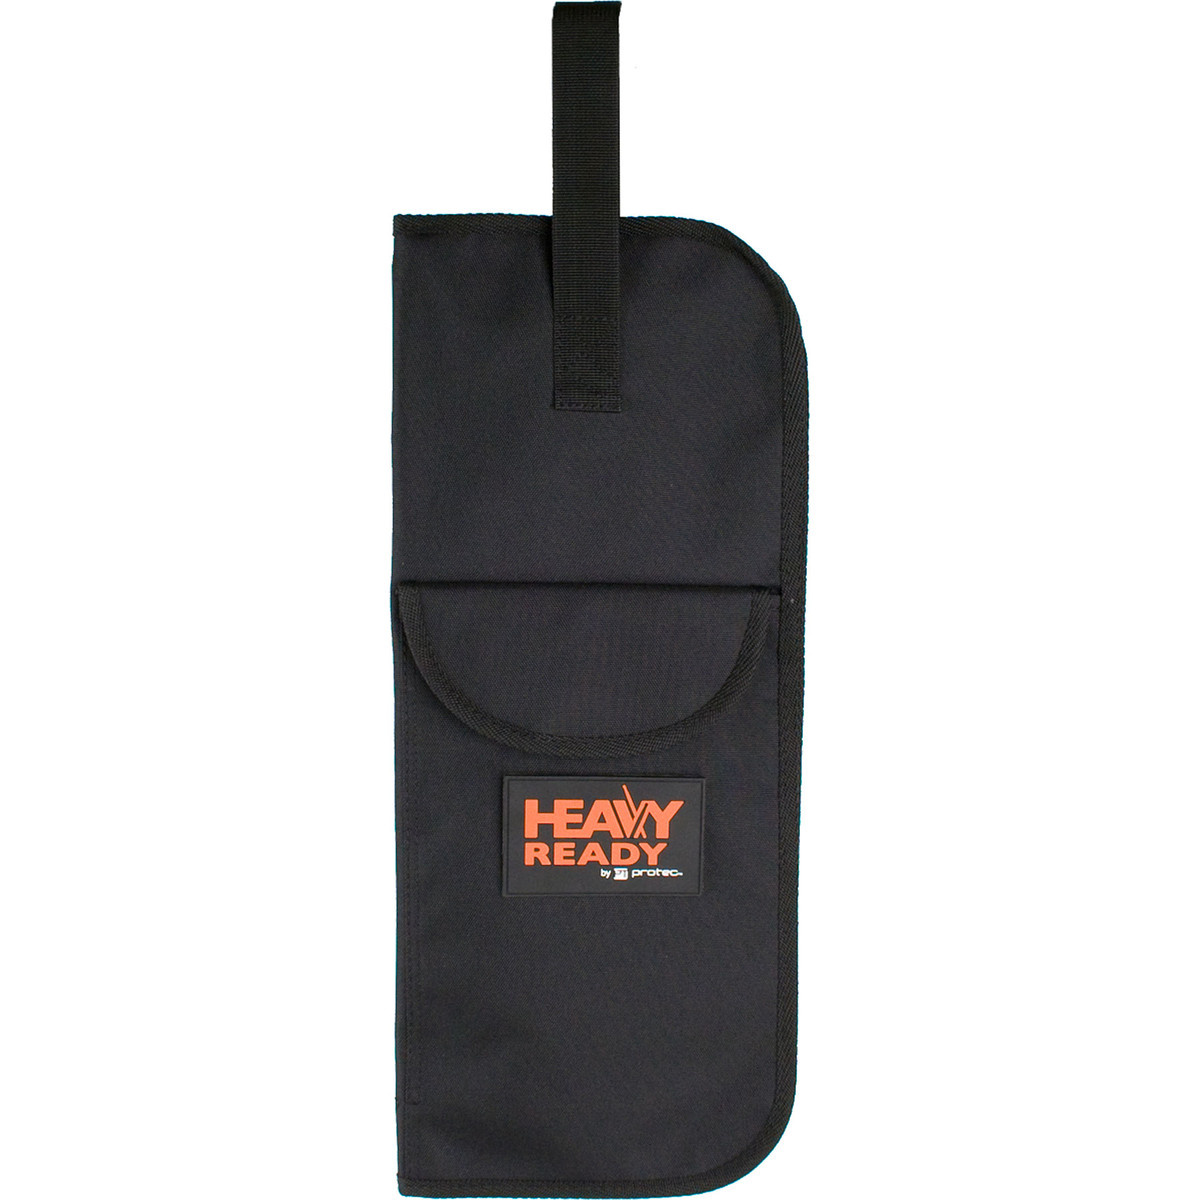 Stash Protec HR337 Horn - Bag Ready Heavy Stick/Mallet